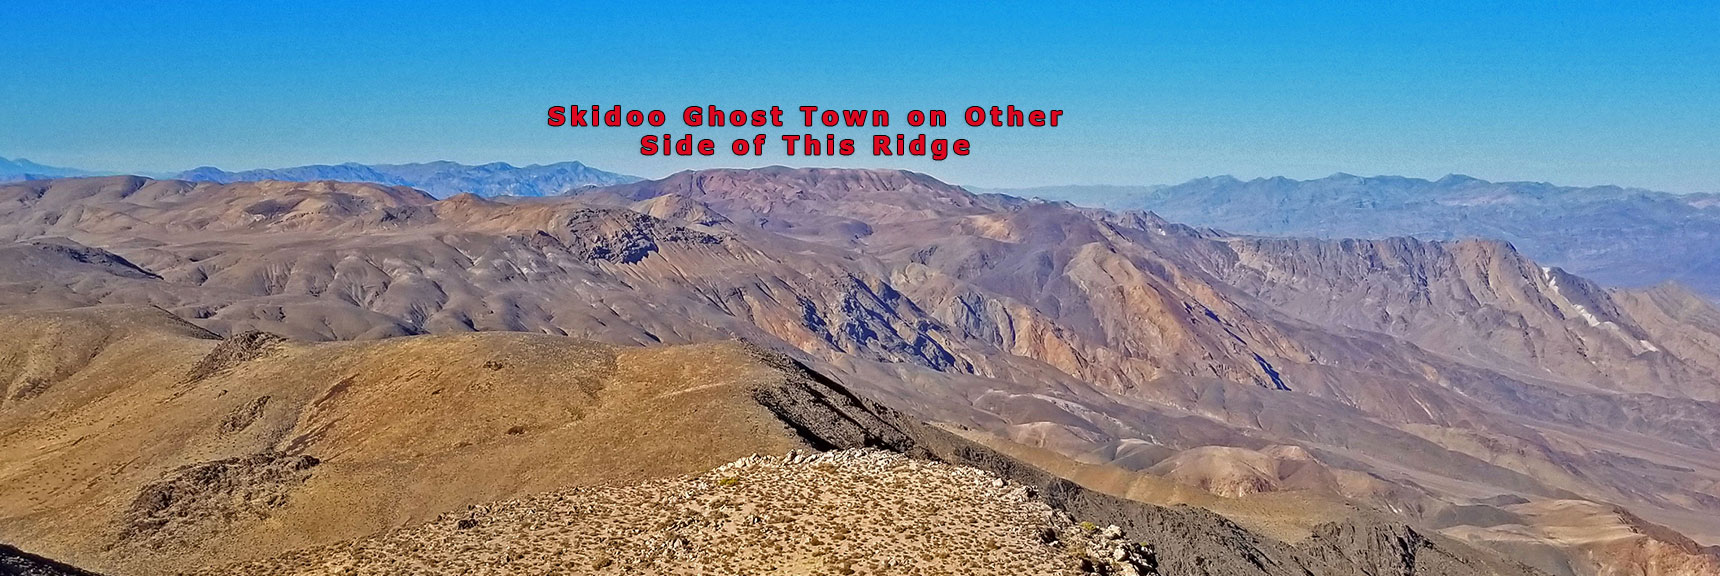 Northwestern View Toward Skidoo Ghost Town Ridge | Aguereberry Point | Panamint Mountain Range | Death Valley National Park, California